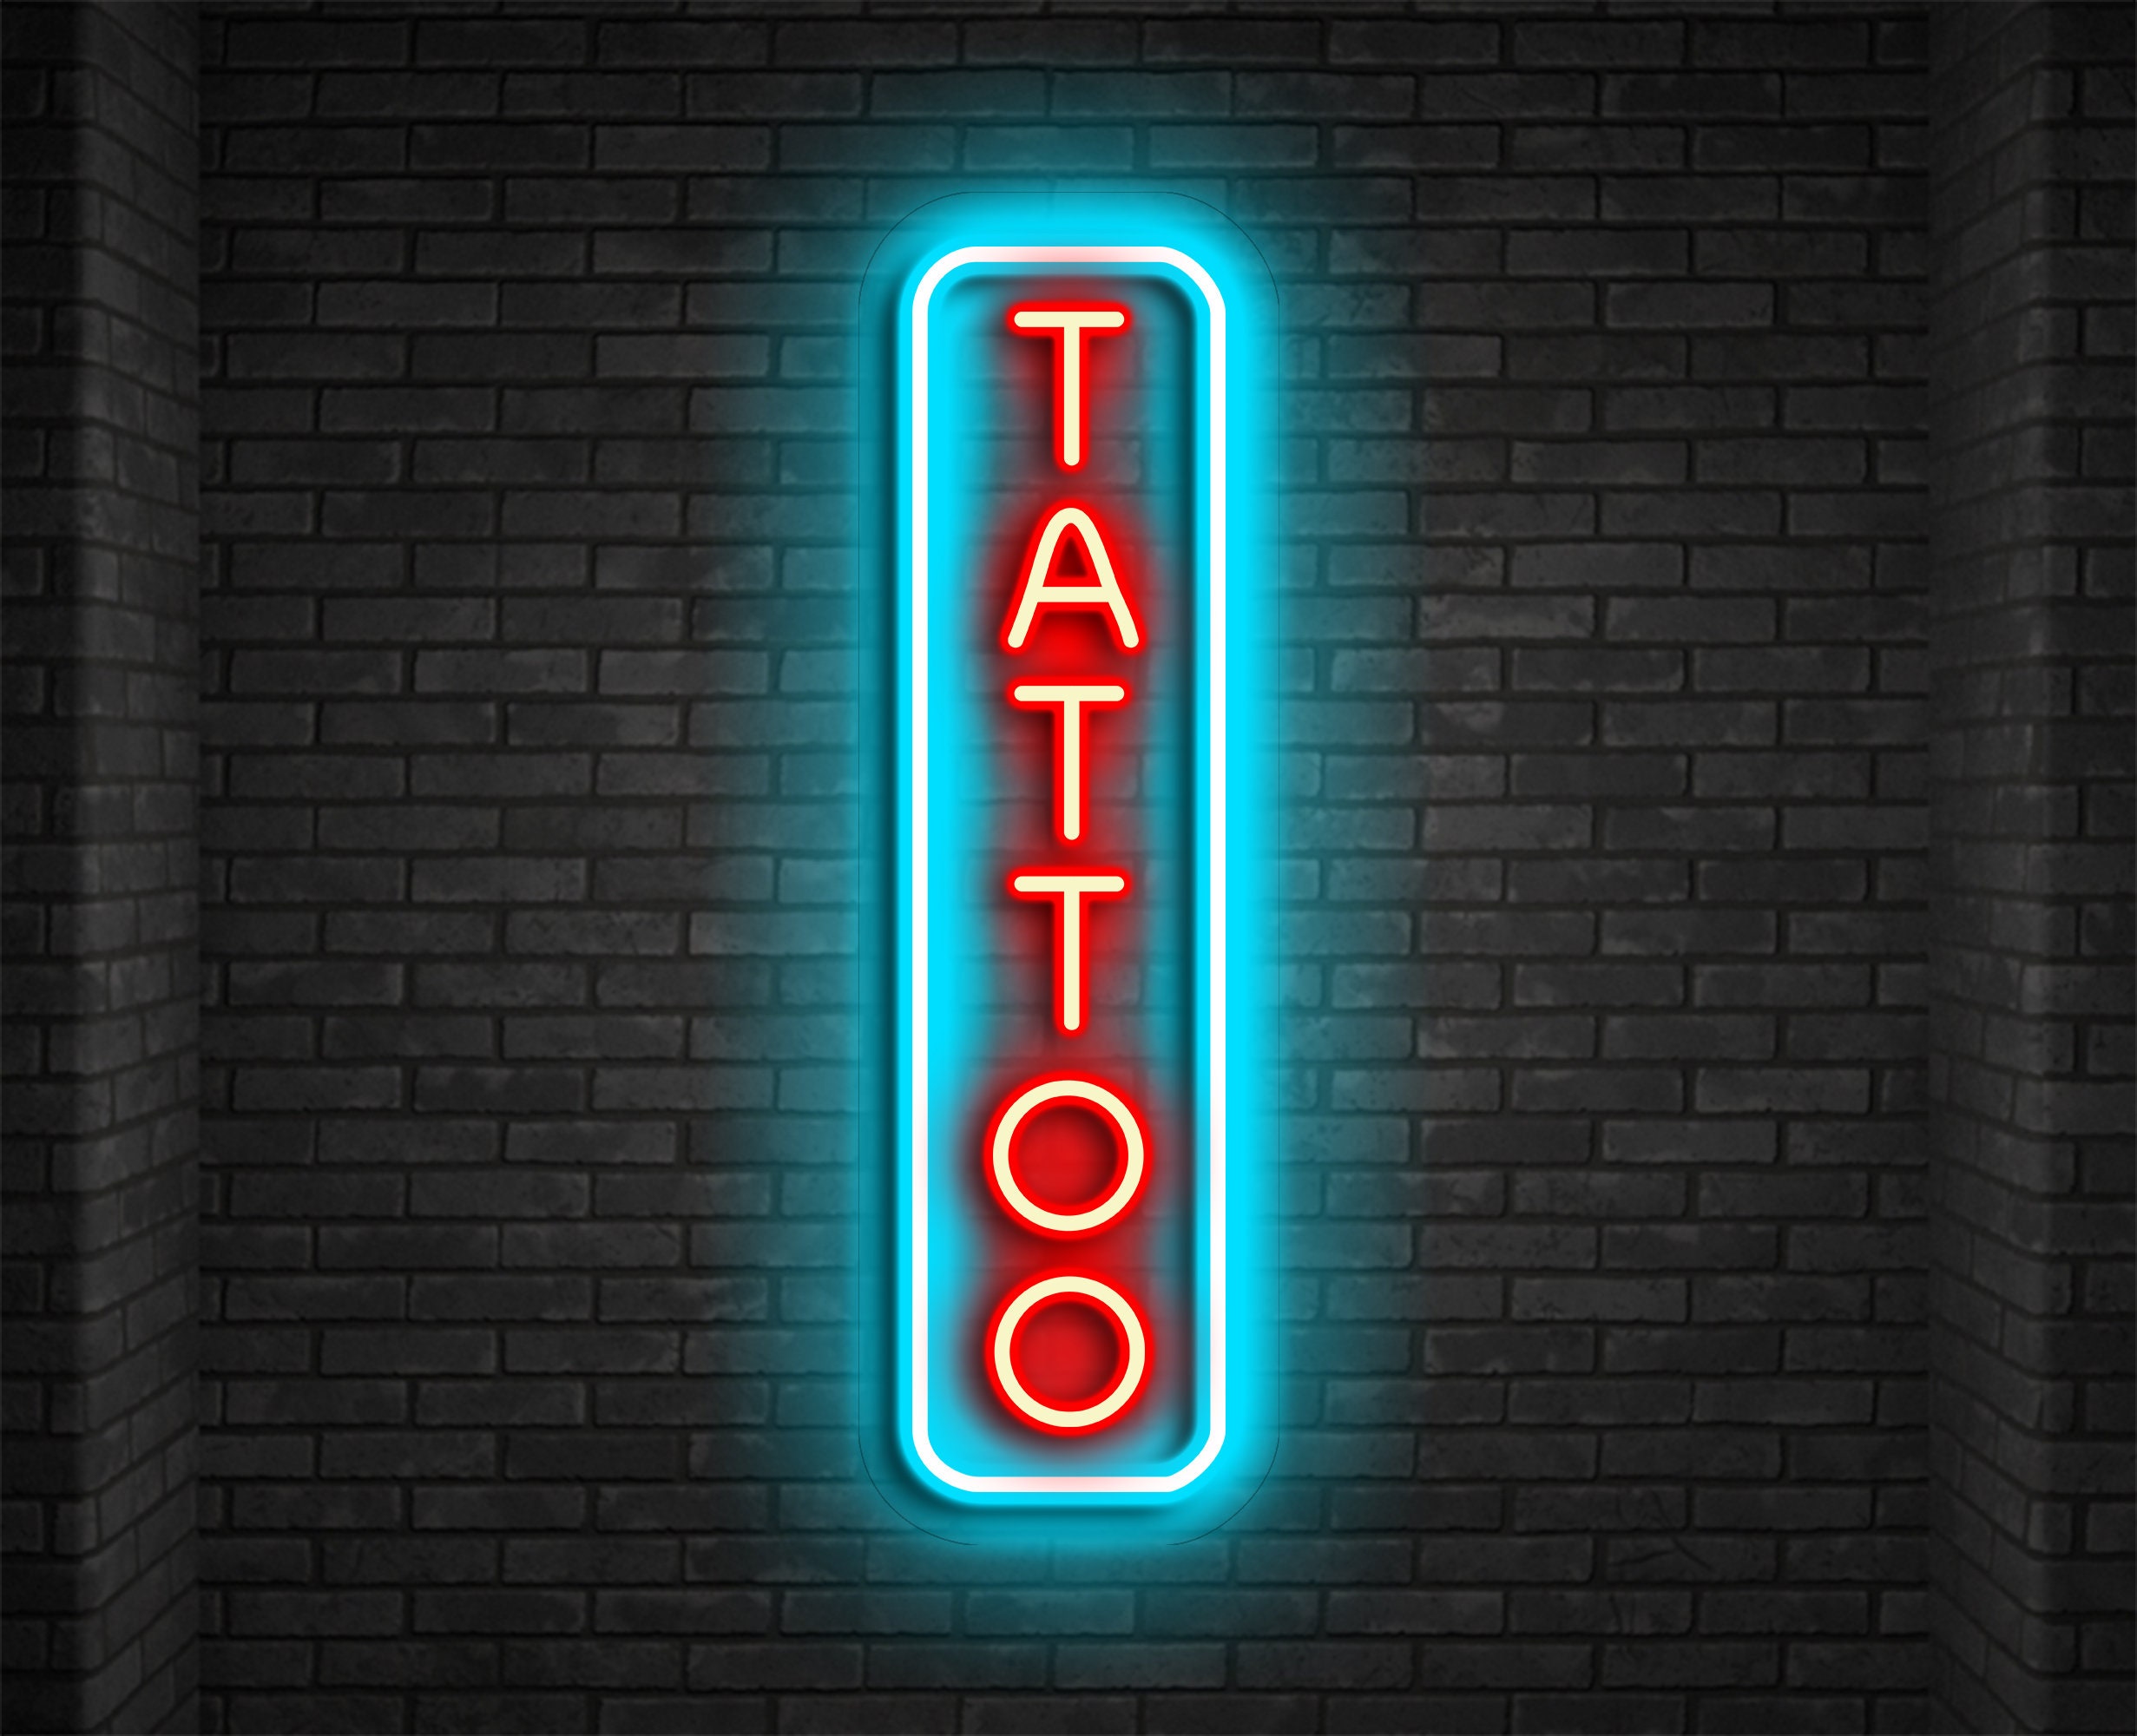 Tattoo neon signage photo  Free Neon Image on Unsplash